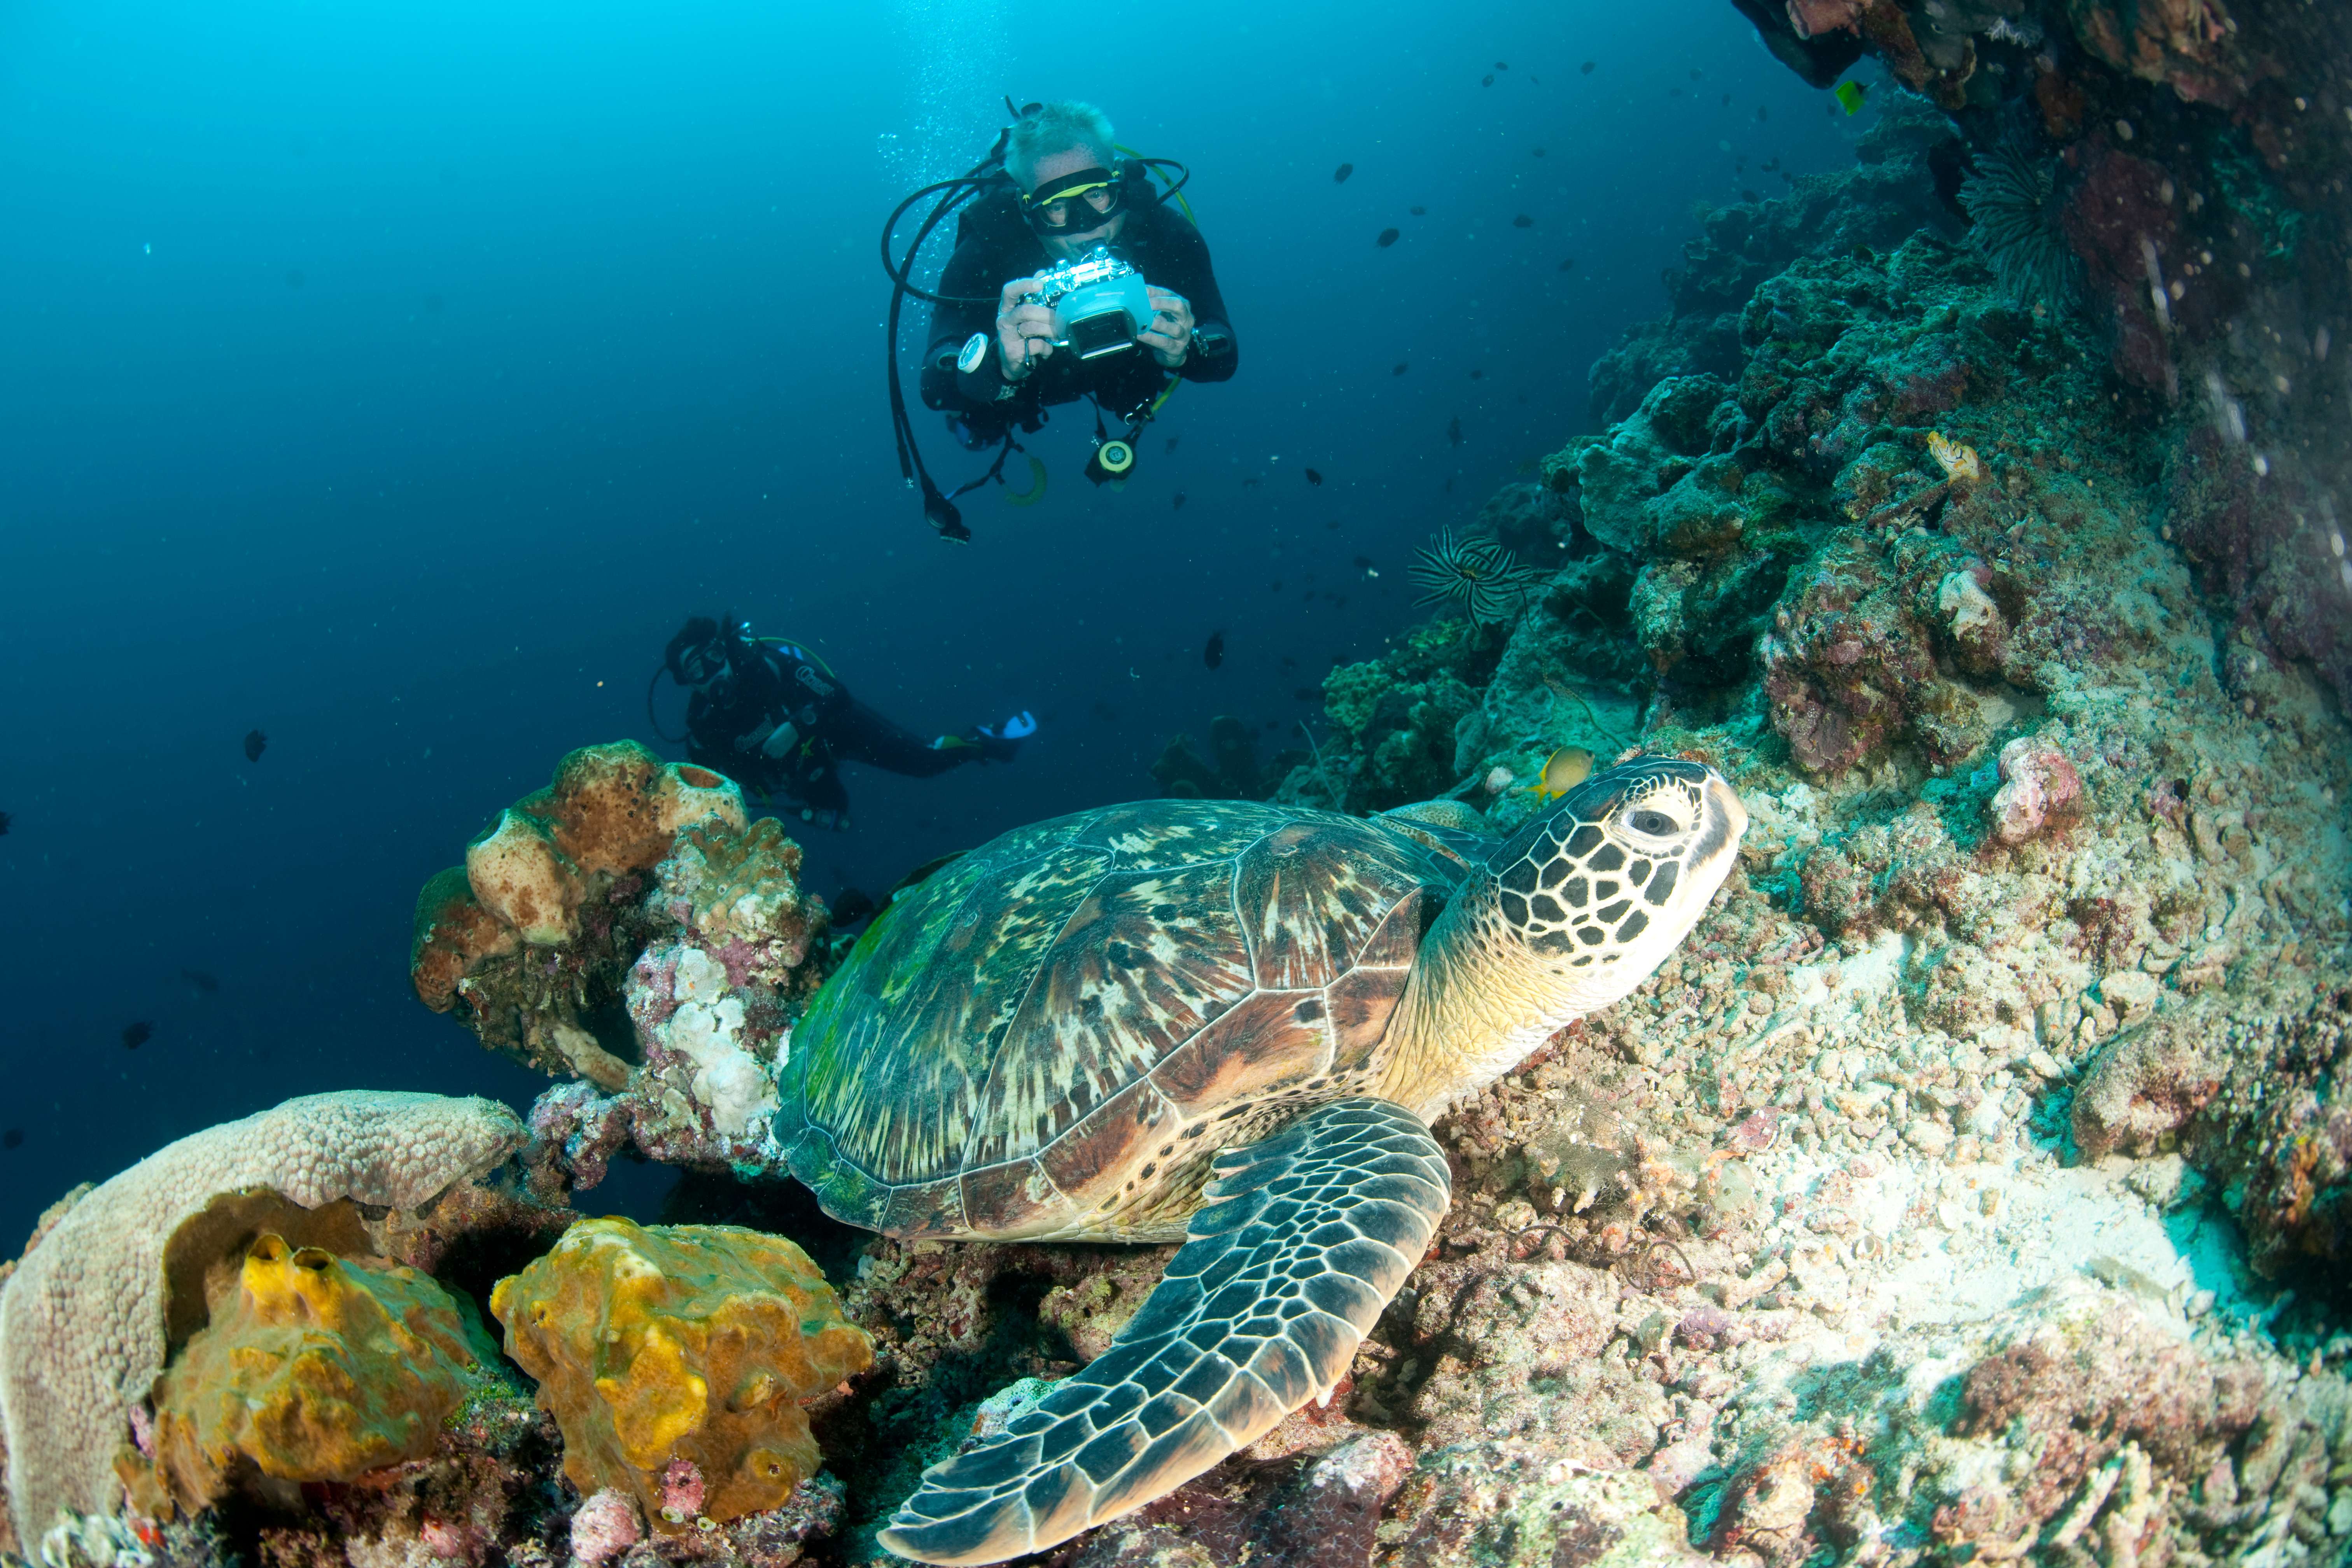 Conservation in places like Bunaken National Parker allows marine biodiversity to flourish. Photo by Jurgen Freund/WWF-Canon